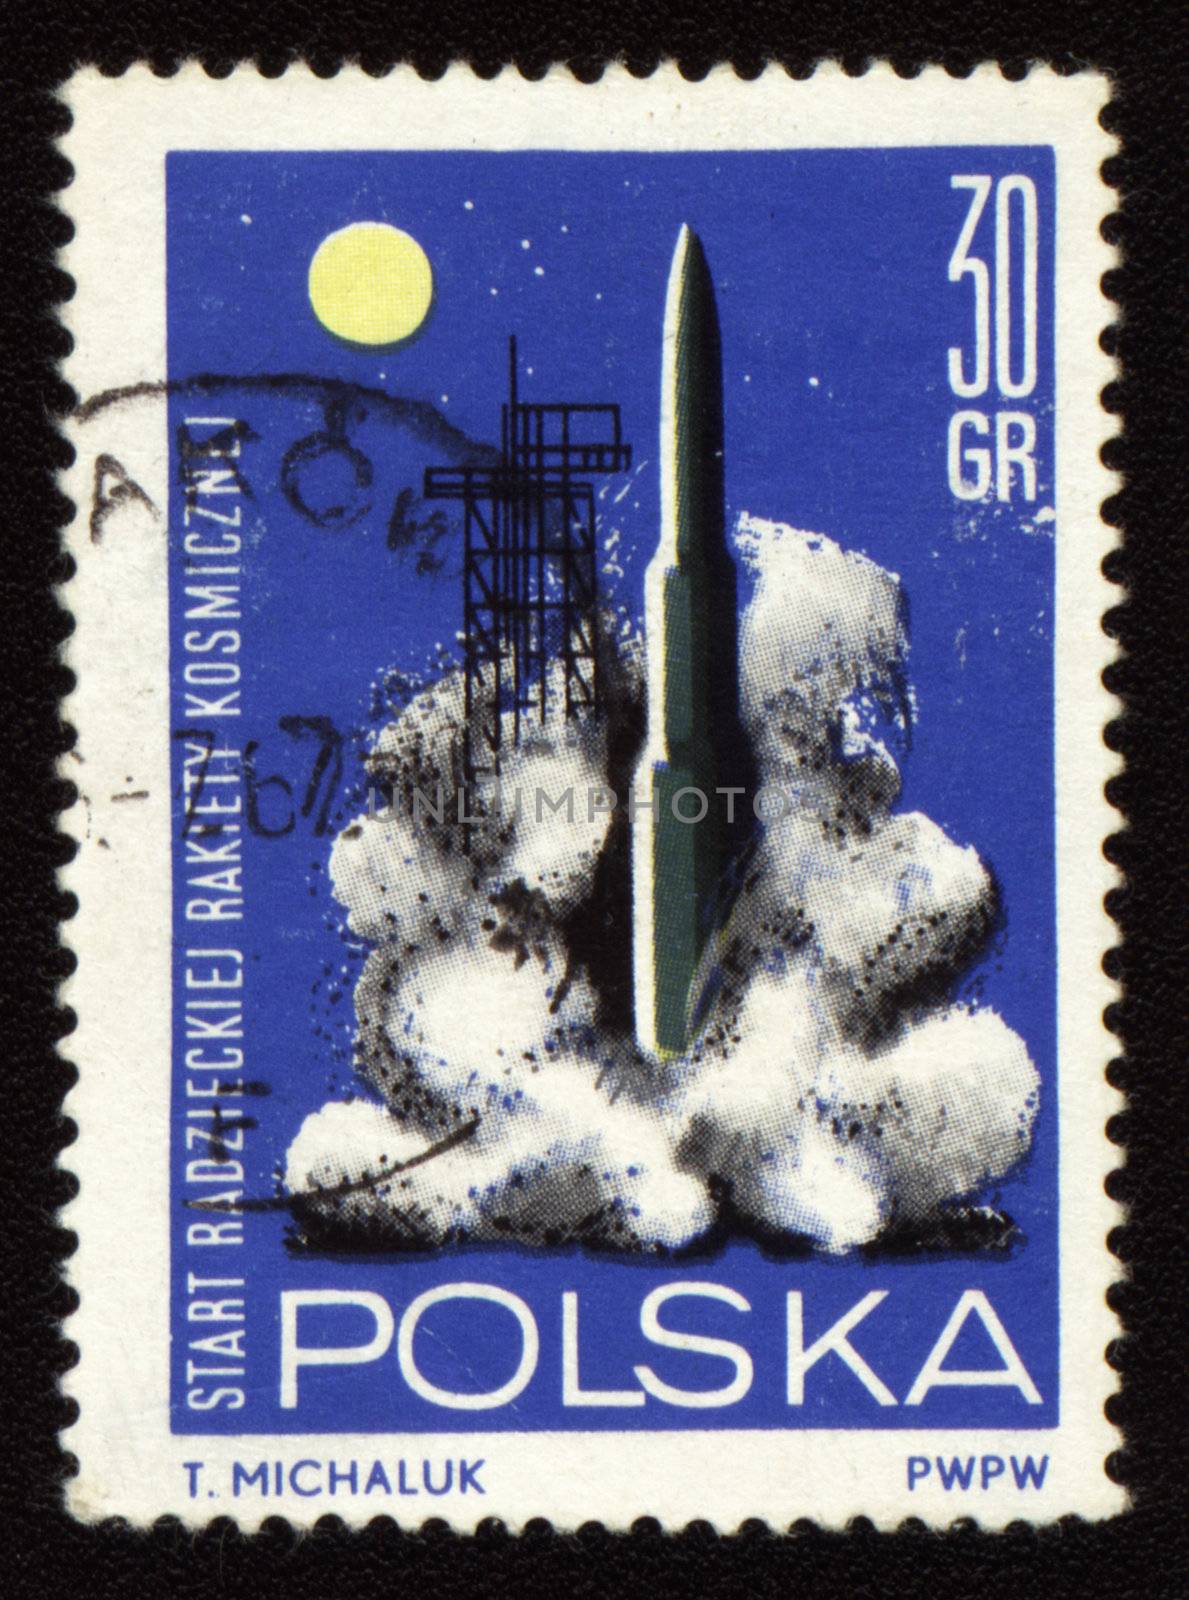 Rocket start on post stamp by wander